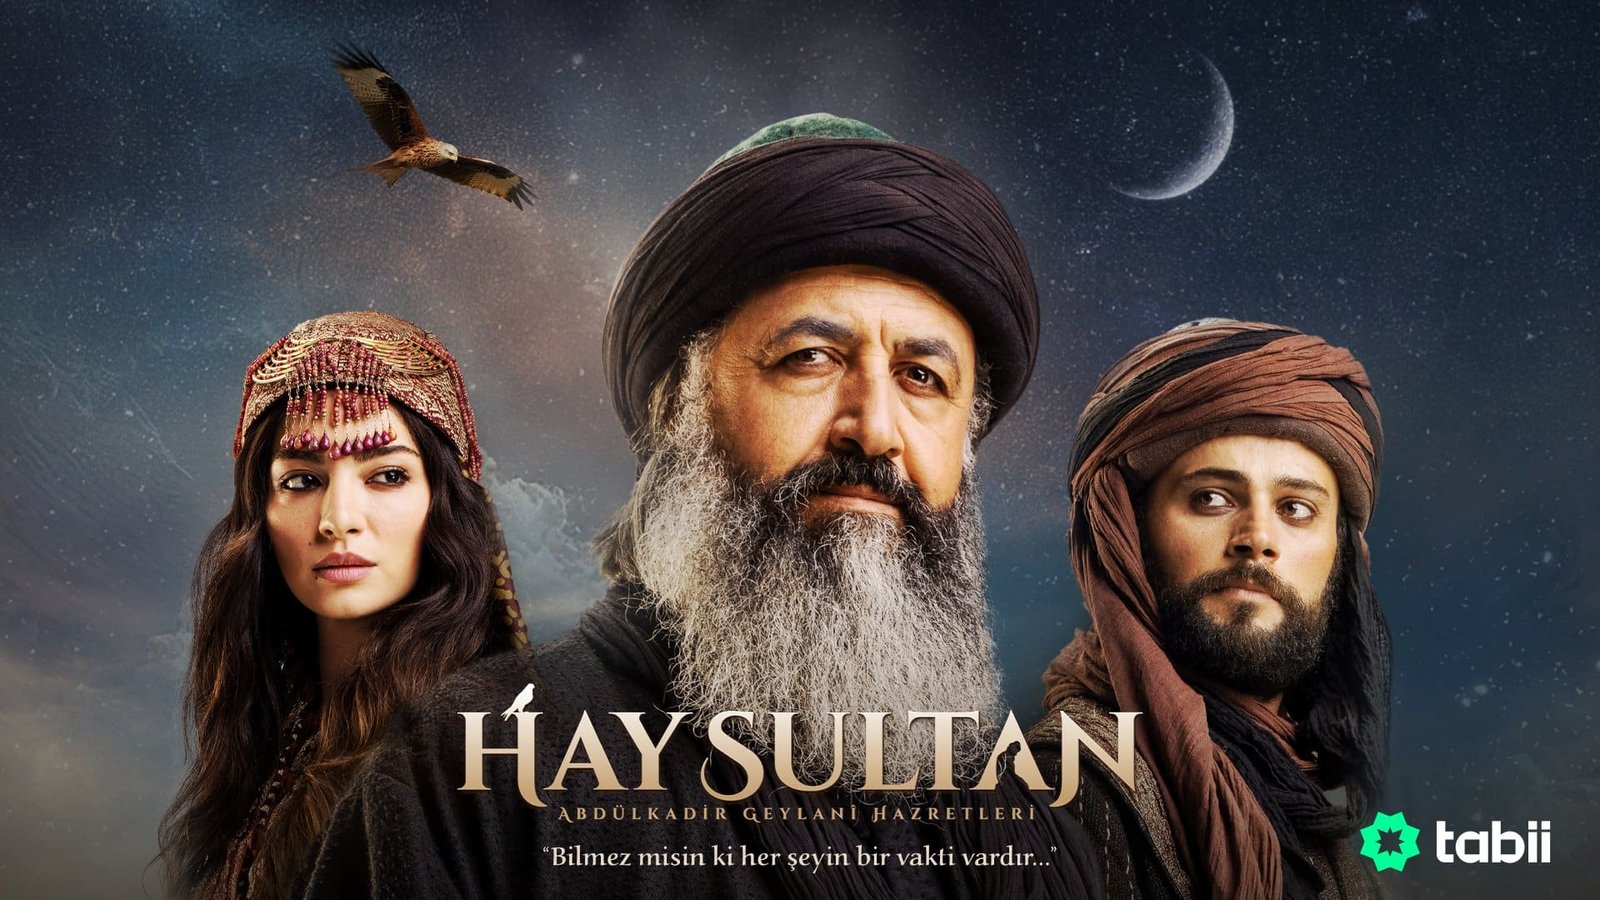 Hay Sultan Abdulkadir Geylani Episode 9 English Subtitles